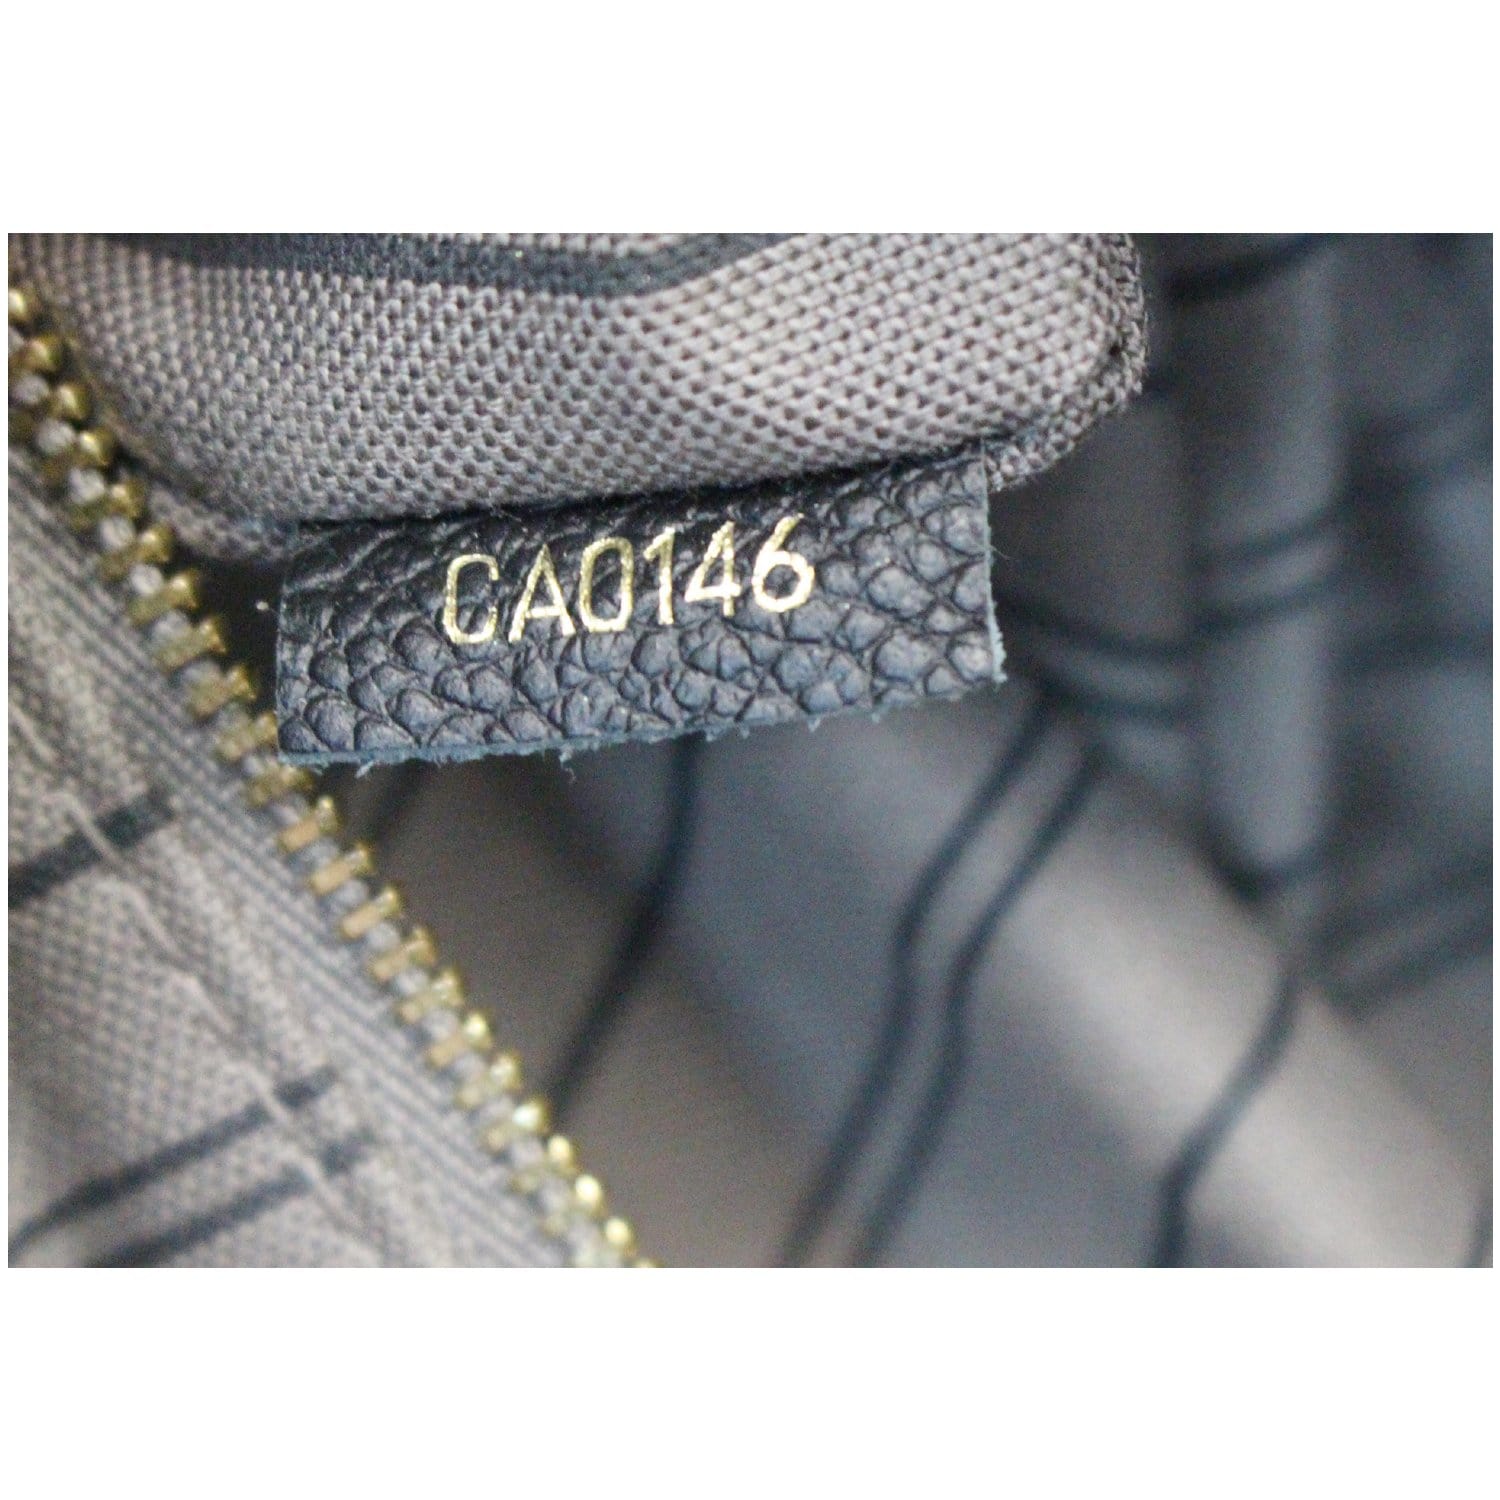 Louis Vuitton - Authenticated Artsy Handbag - Leather Black Plain for Women, Good Condition